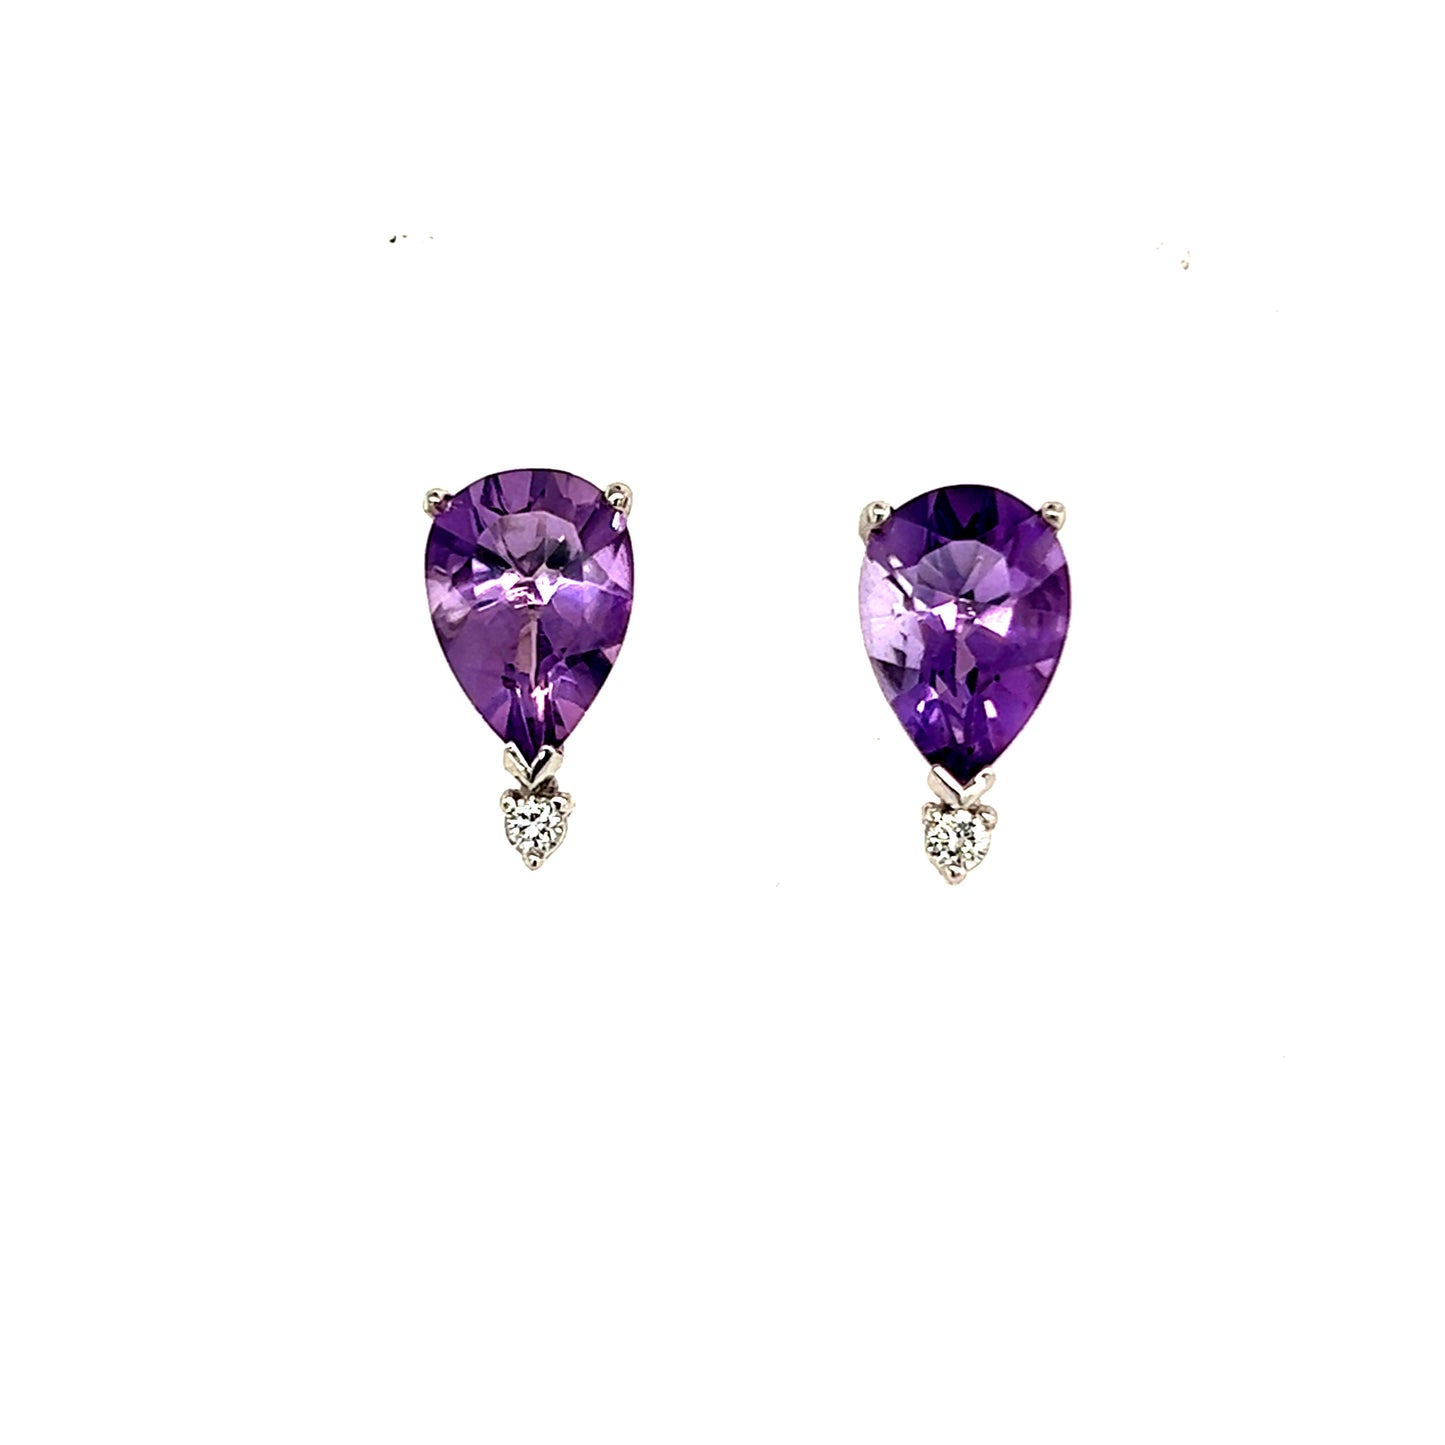 Natural Amethyst Diamond Earrings 14k Gold 3.71 TCW Certified $2,950 210754